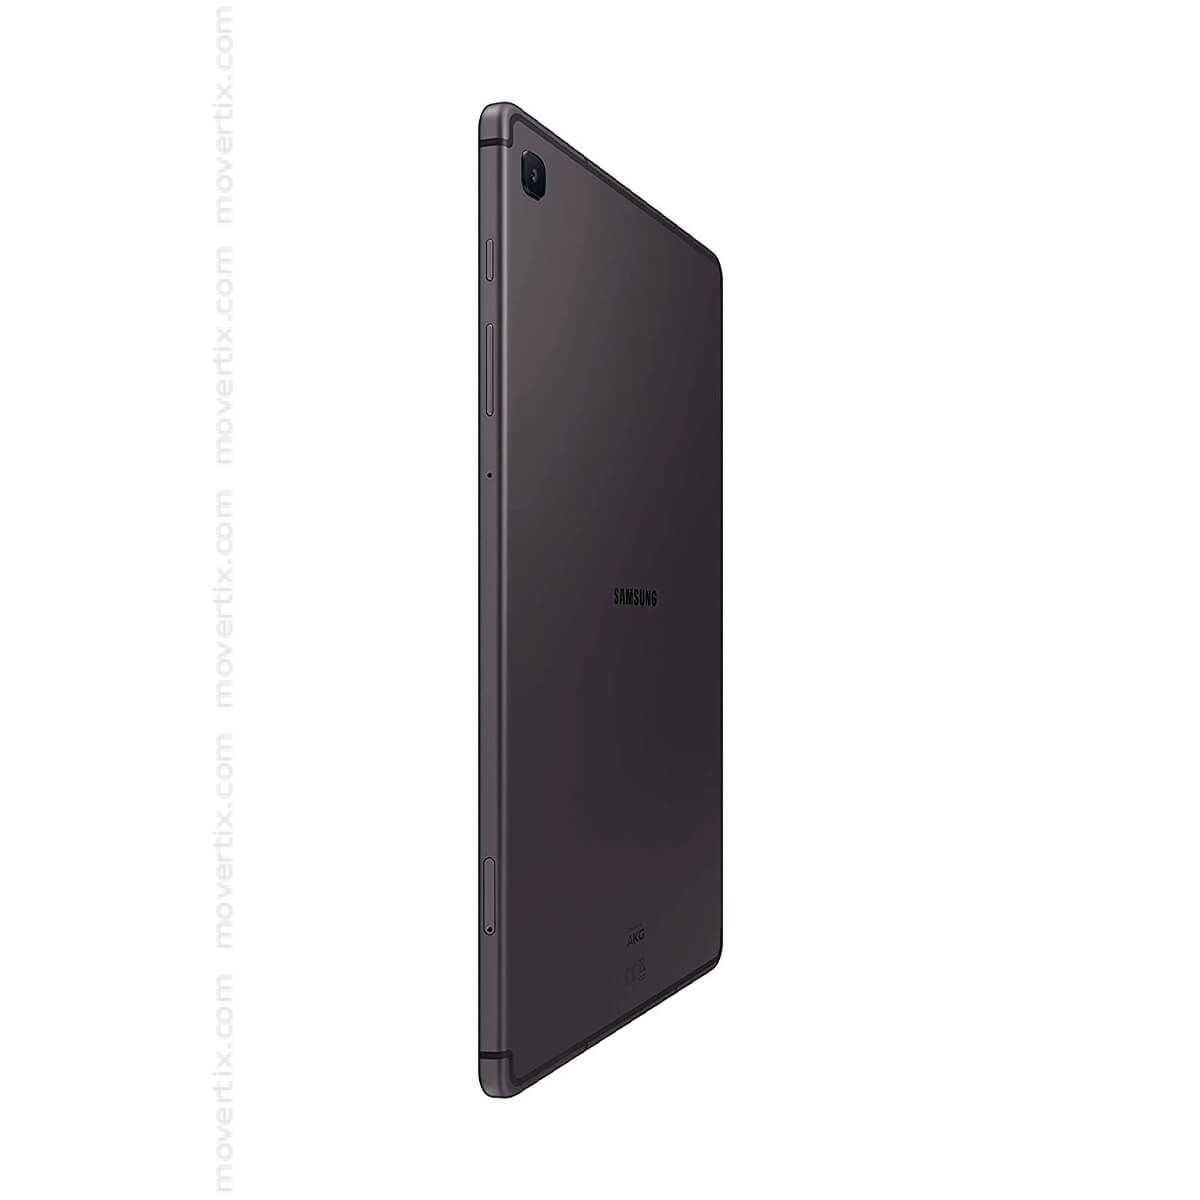 Samsung Galaxy Tab S6 Lite (2022) 10.4 64GB Wi-Fi Oxford Gray  SM-P613NZAAXAR - Best Buy